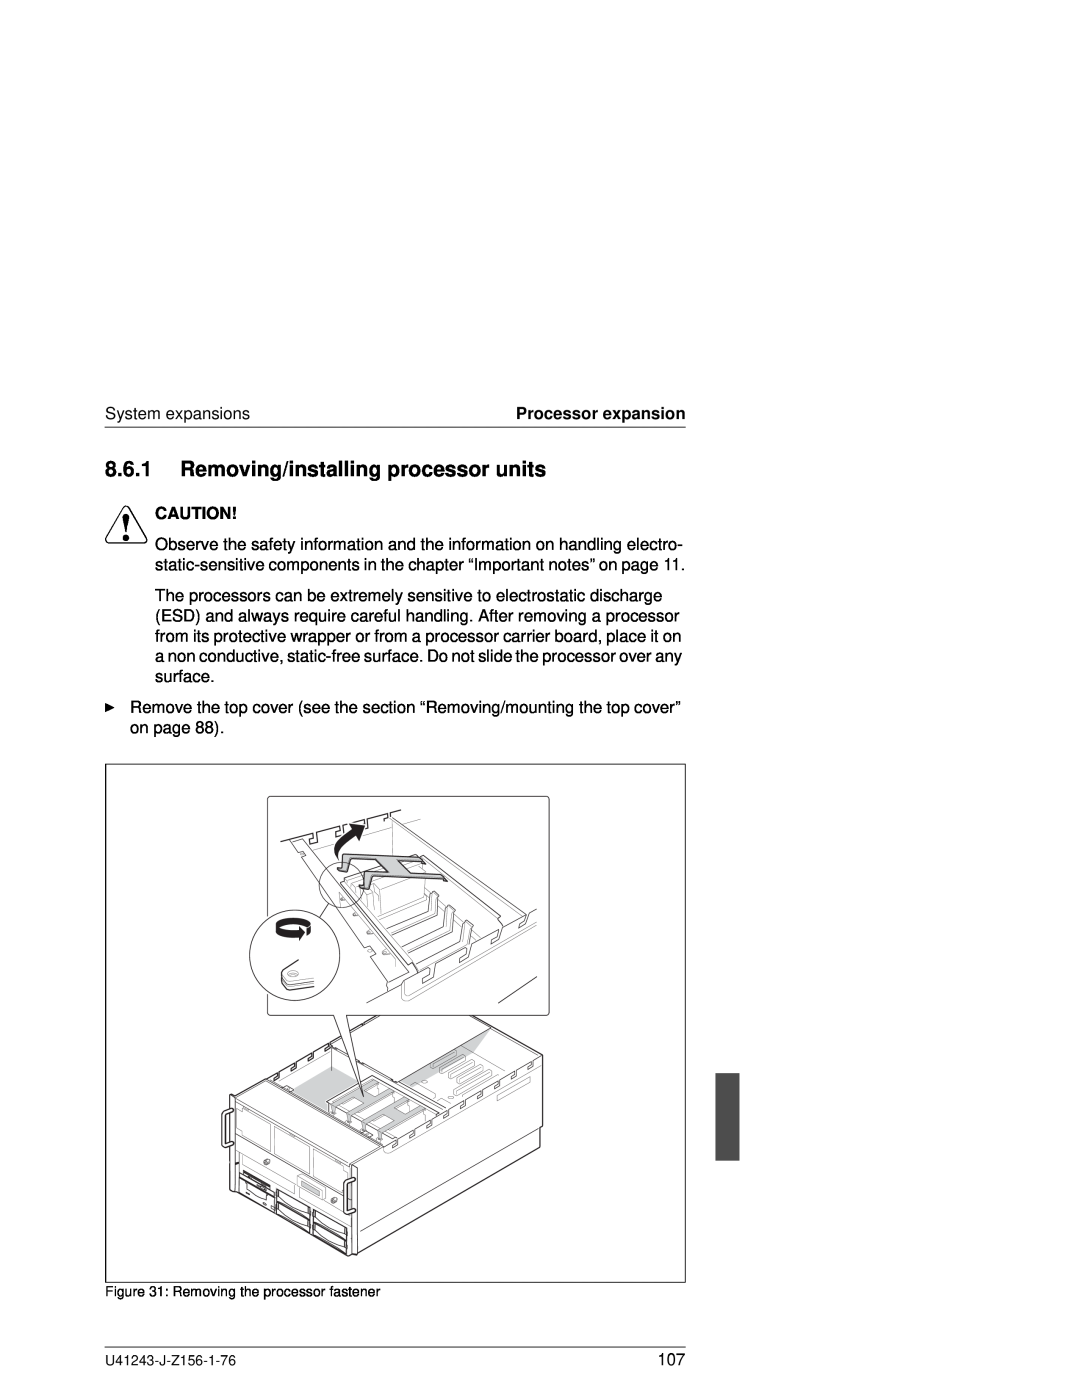 Fujitsu N800 manual Removing/installing processor units, System expansions, V Caution 